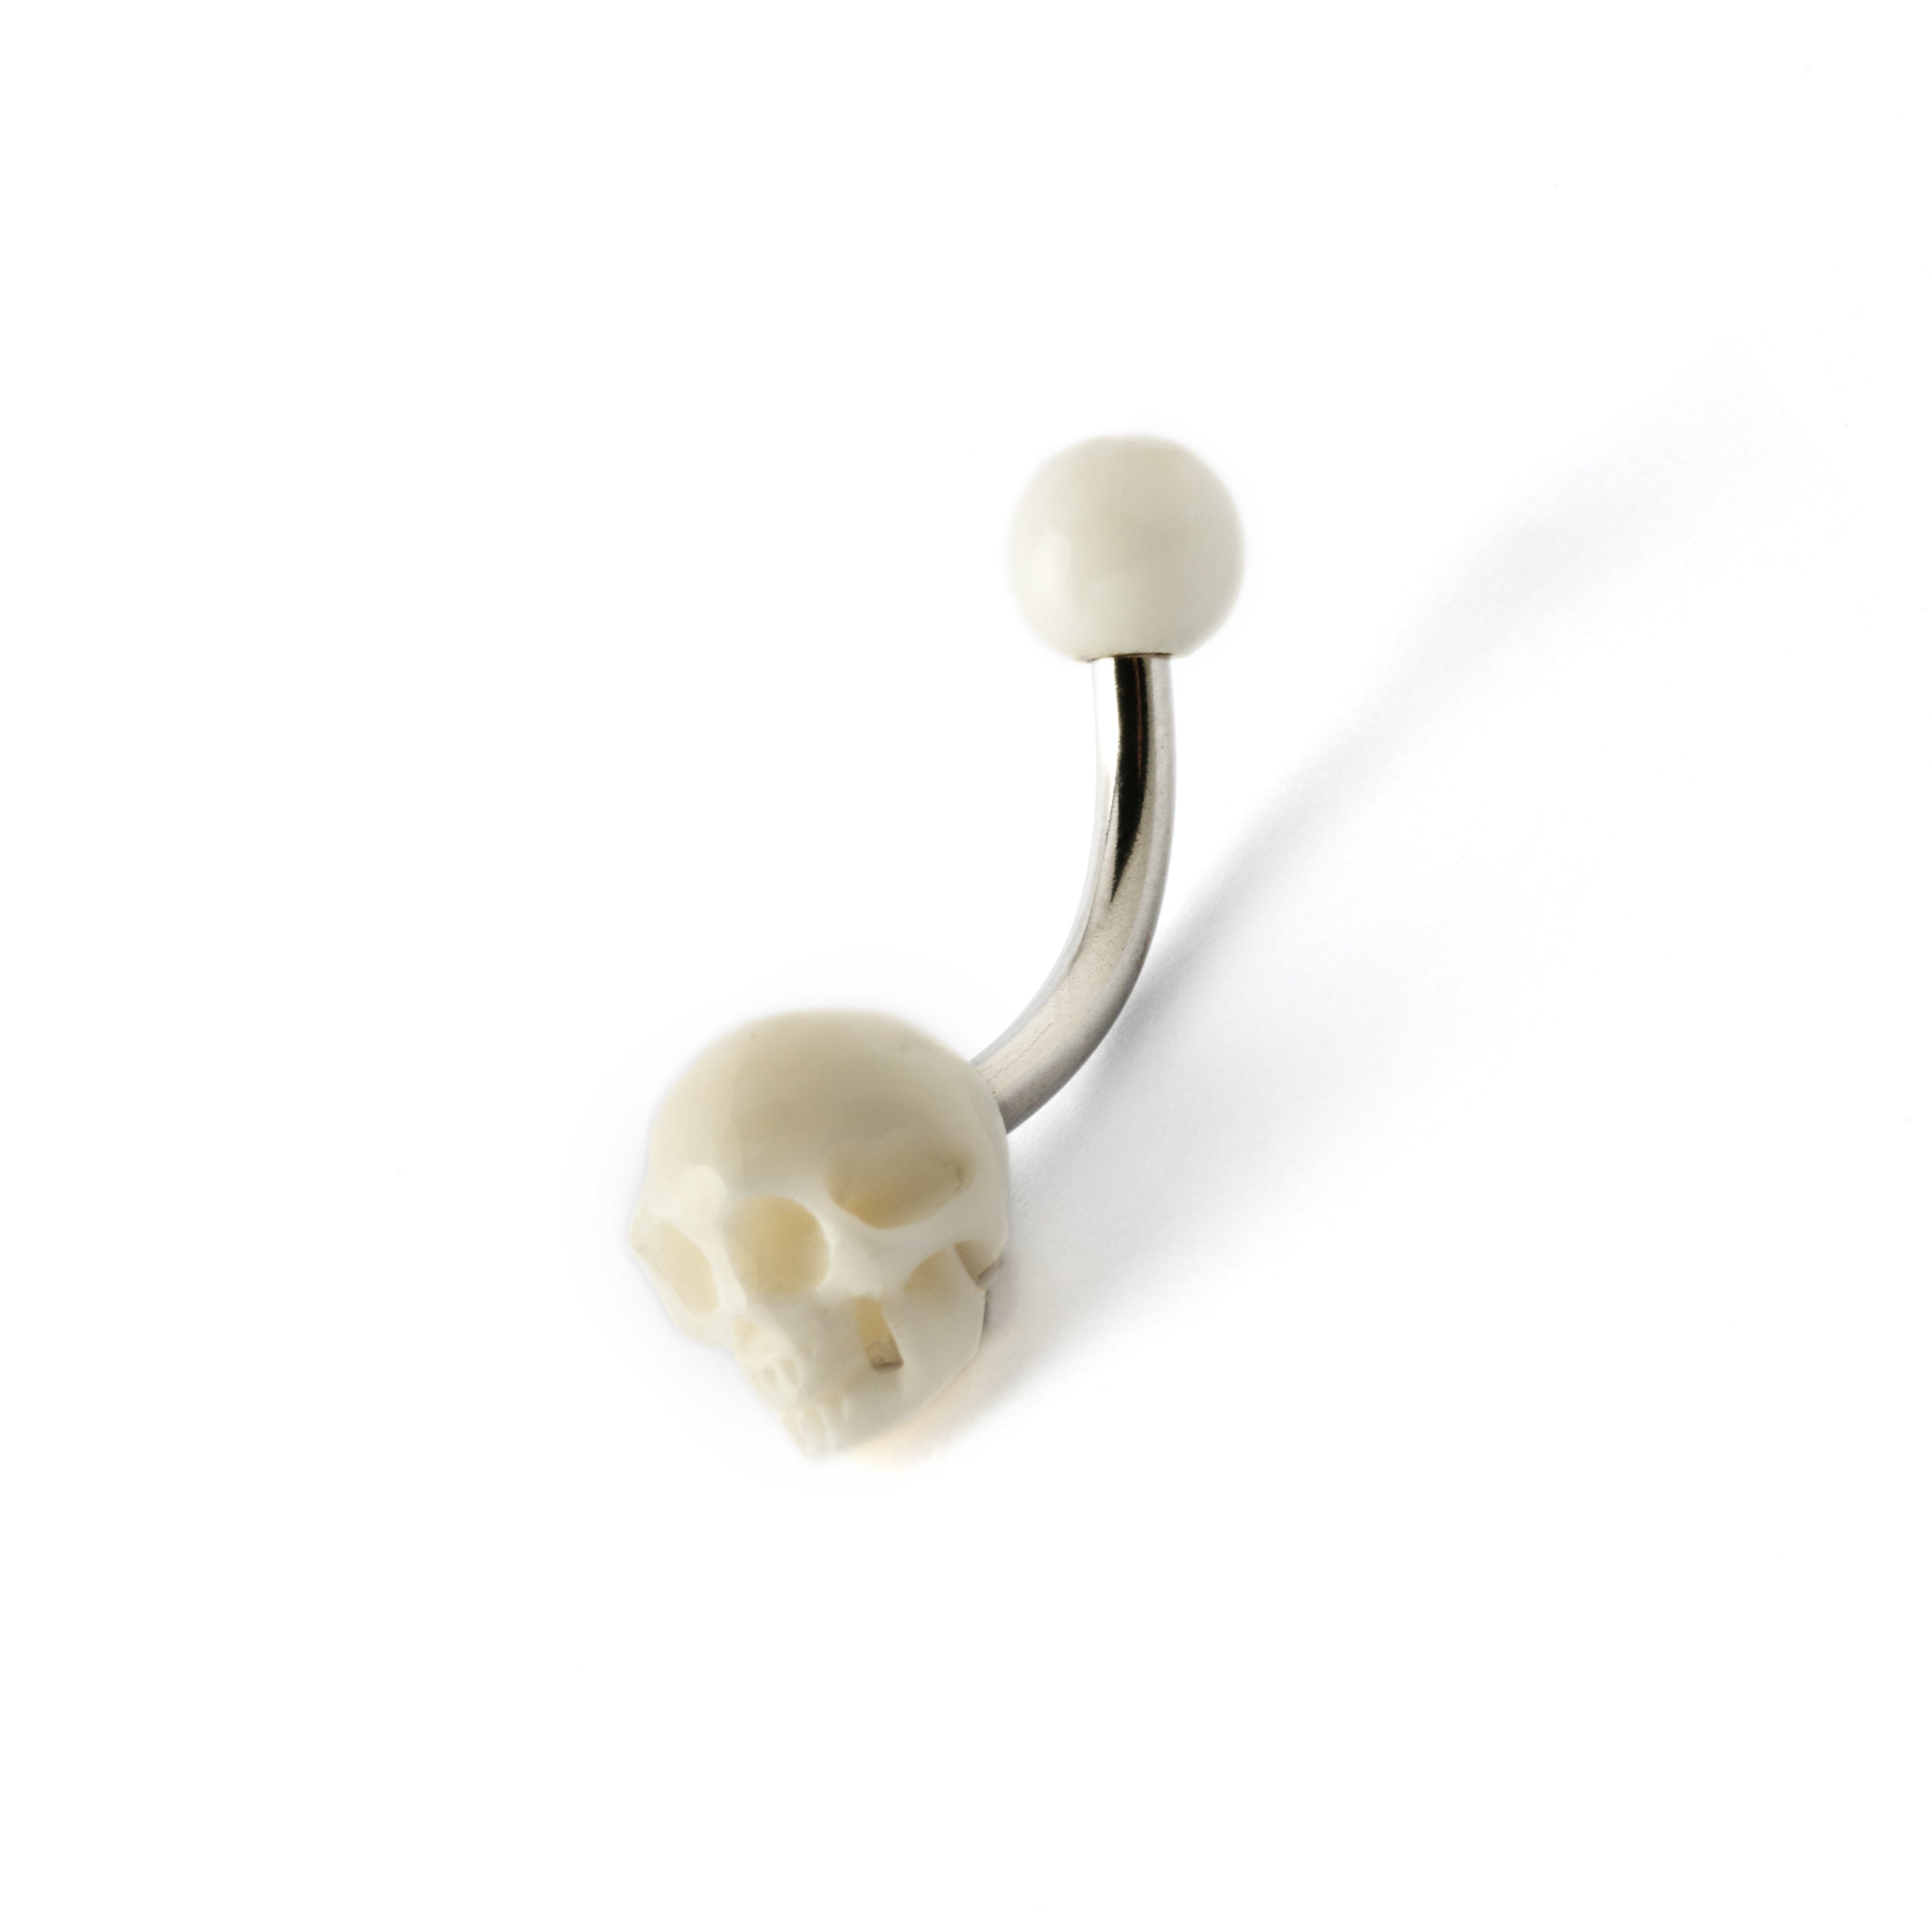 White skull navel piercing on a surgical steel bar left side view